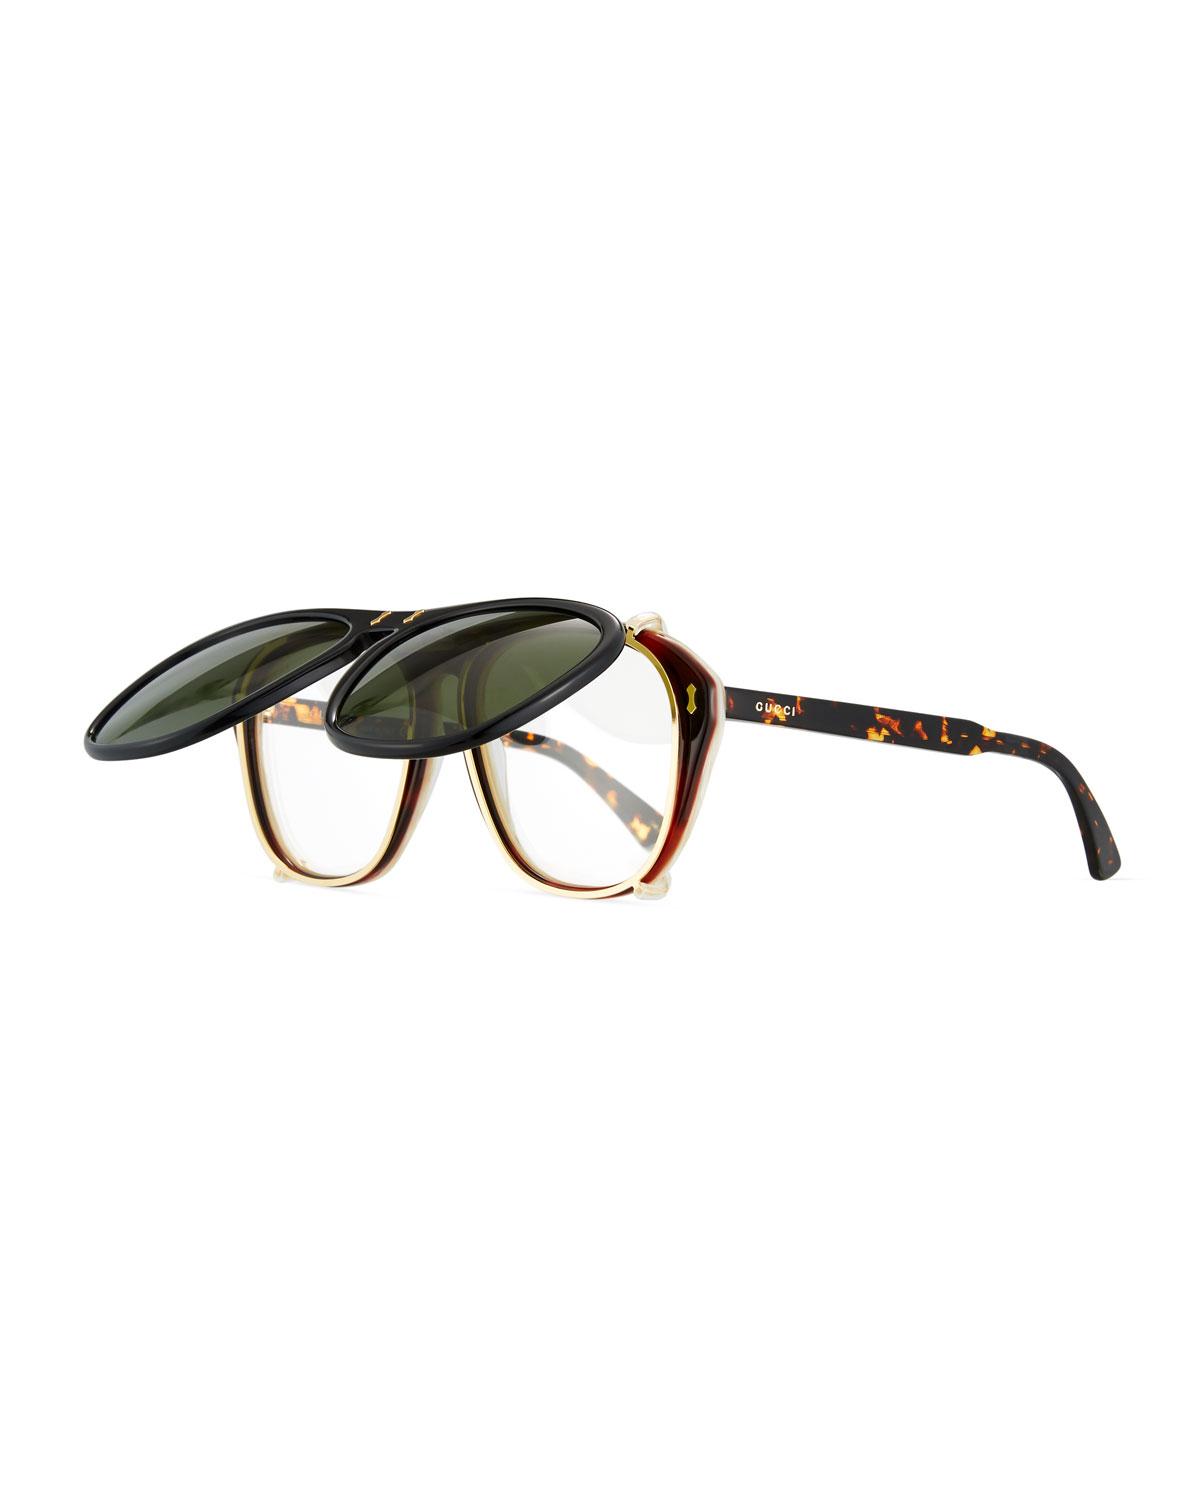 Gucci Men S Acetate Aviator Optical Frames W Sunglasses In Brown For